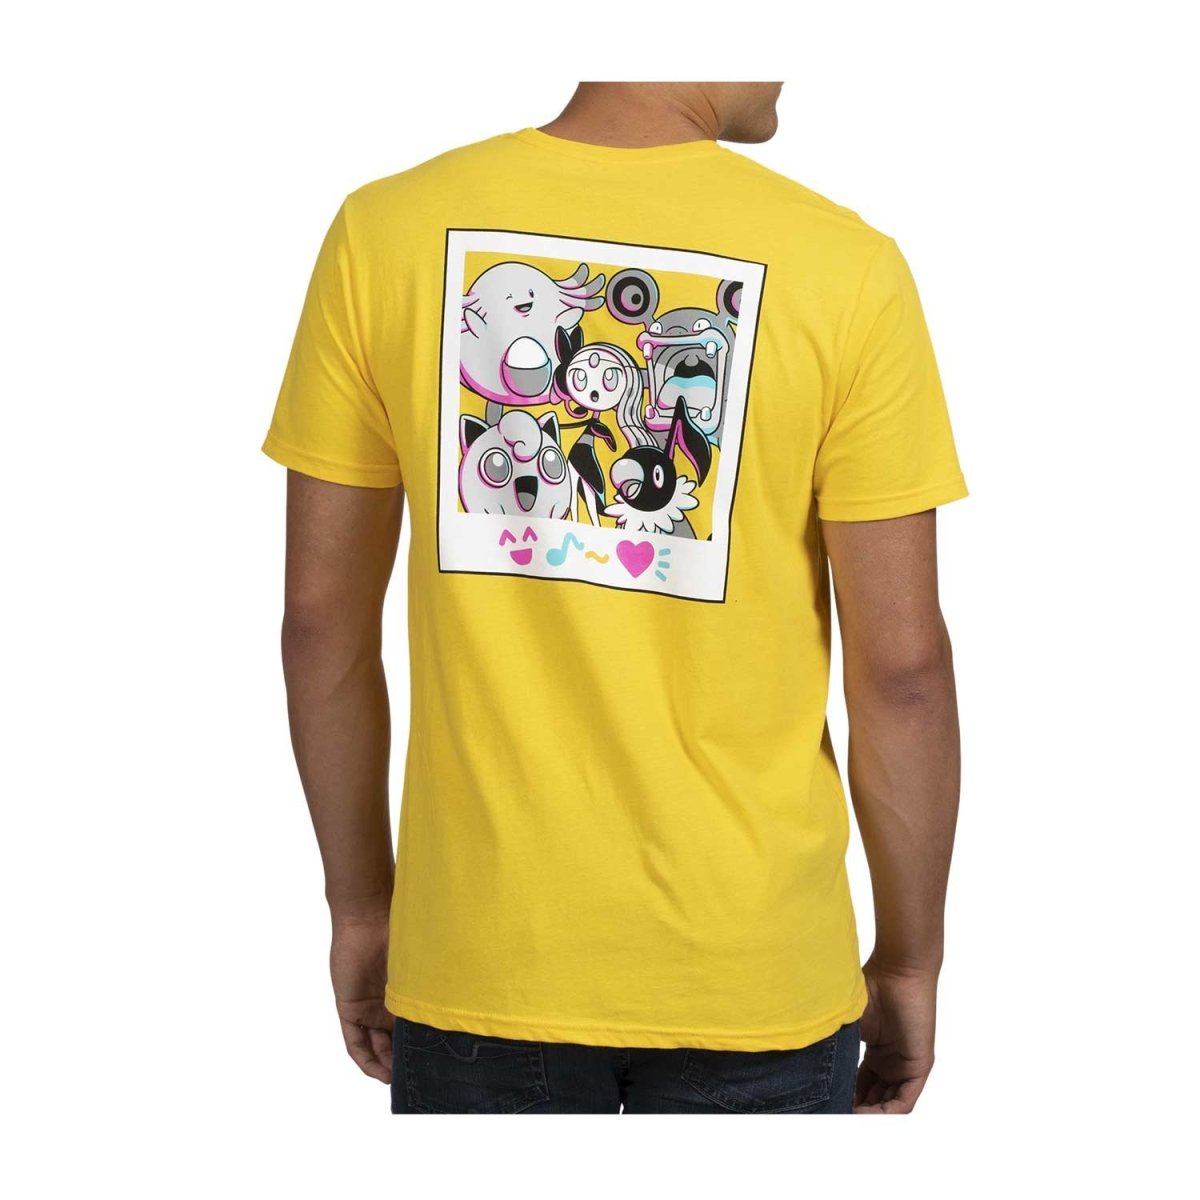 Pokemon Yellow Color Criss Cross Tank Top - CFM Store